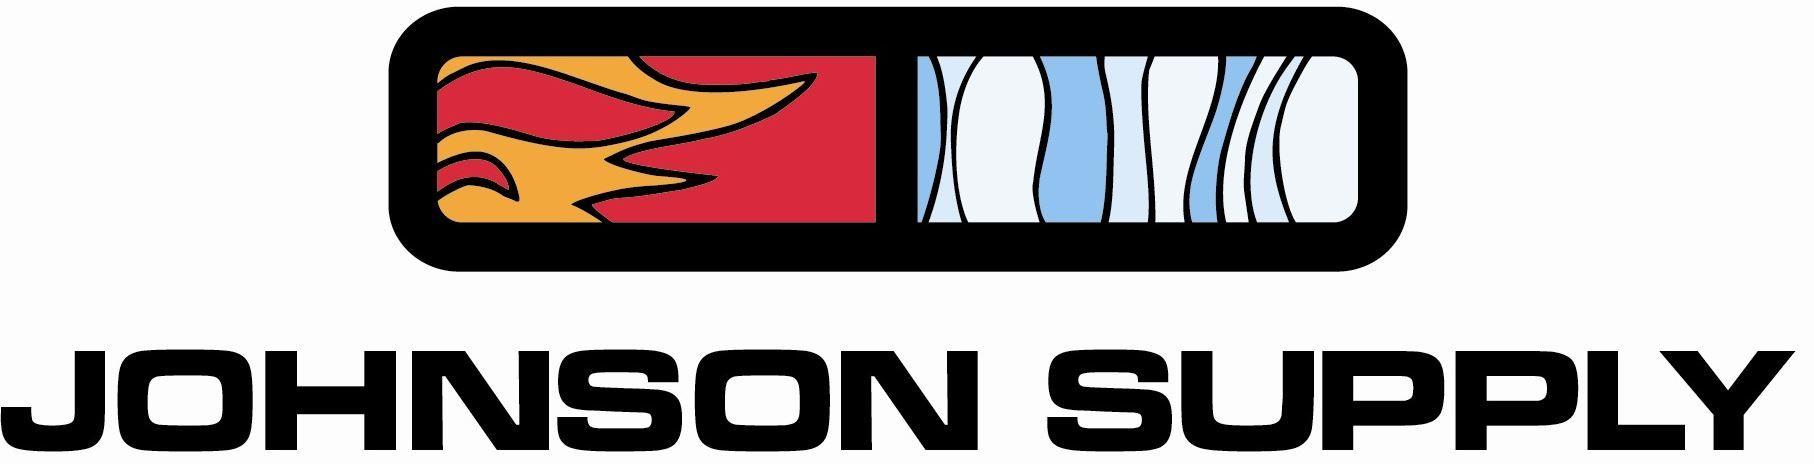 Johnson Supply Logo - Greater Fort Worth Builders Association Golf Tournament